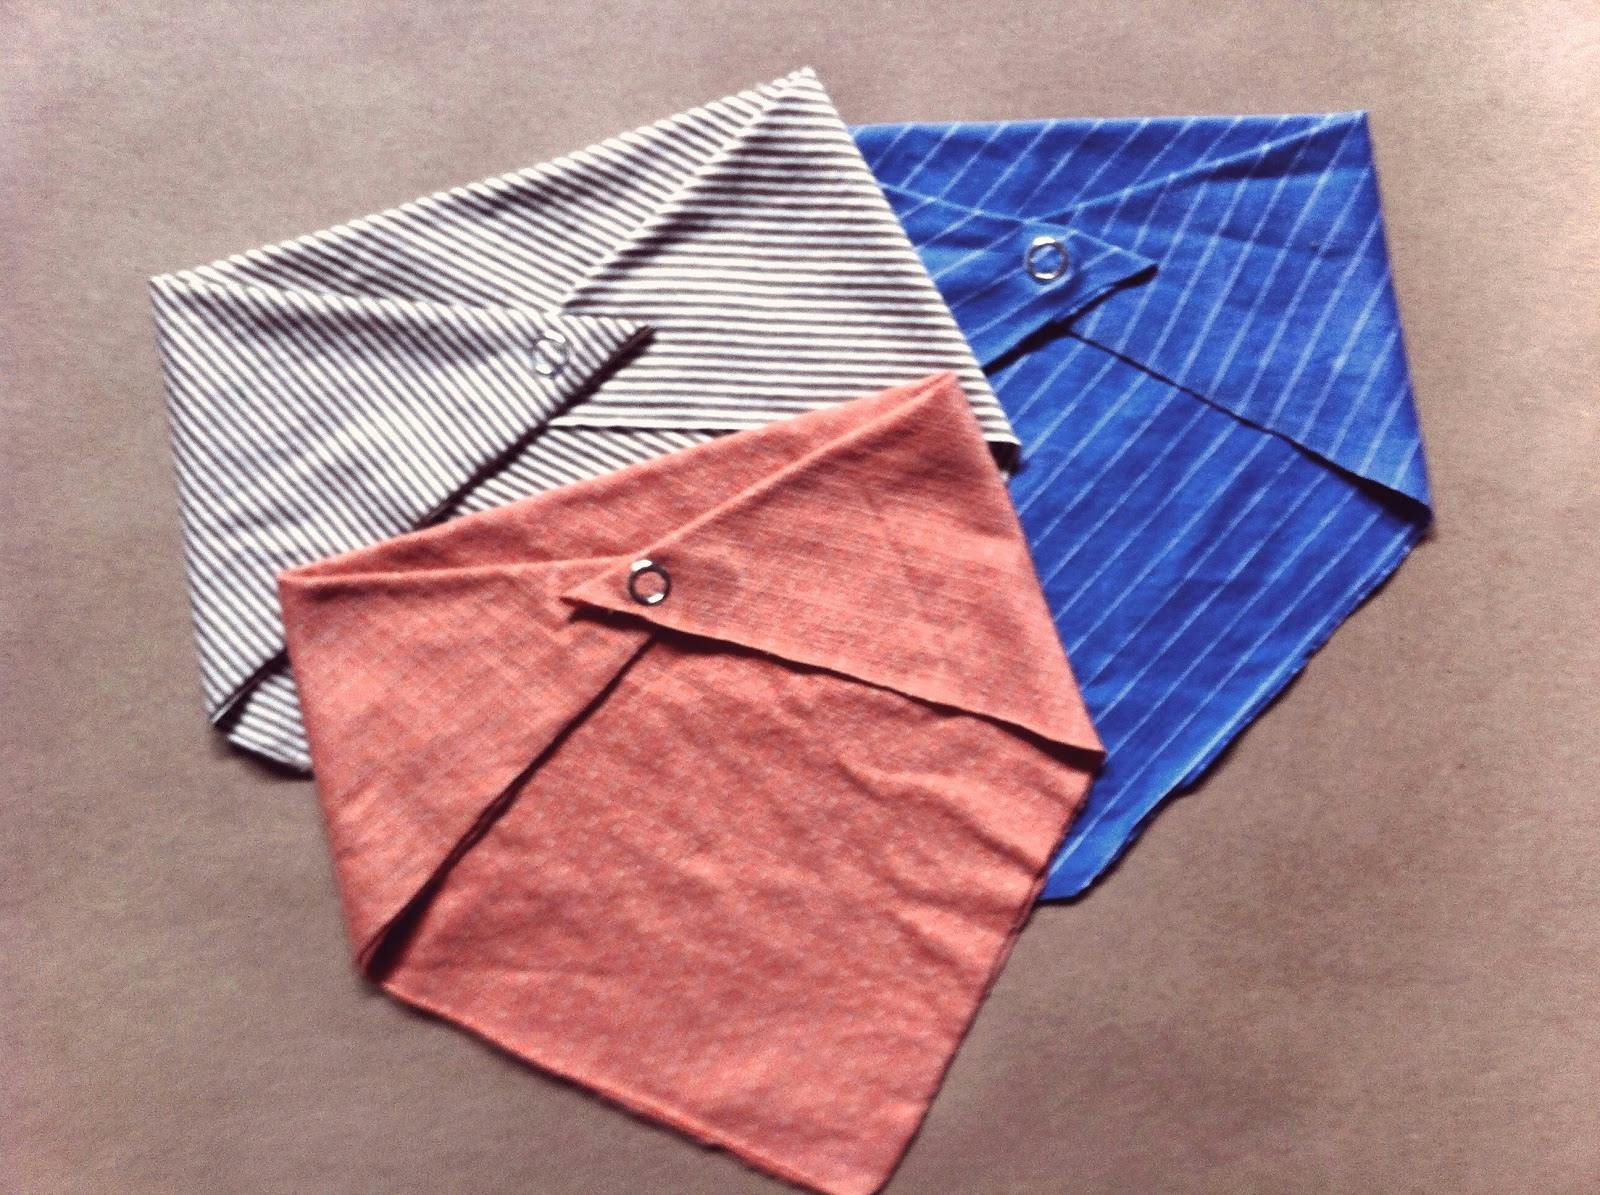 Create no-sew up-cycled bandana bibs with old shirts to save $3 per bib.